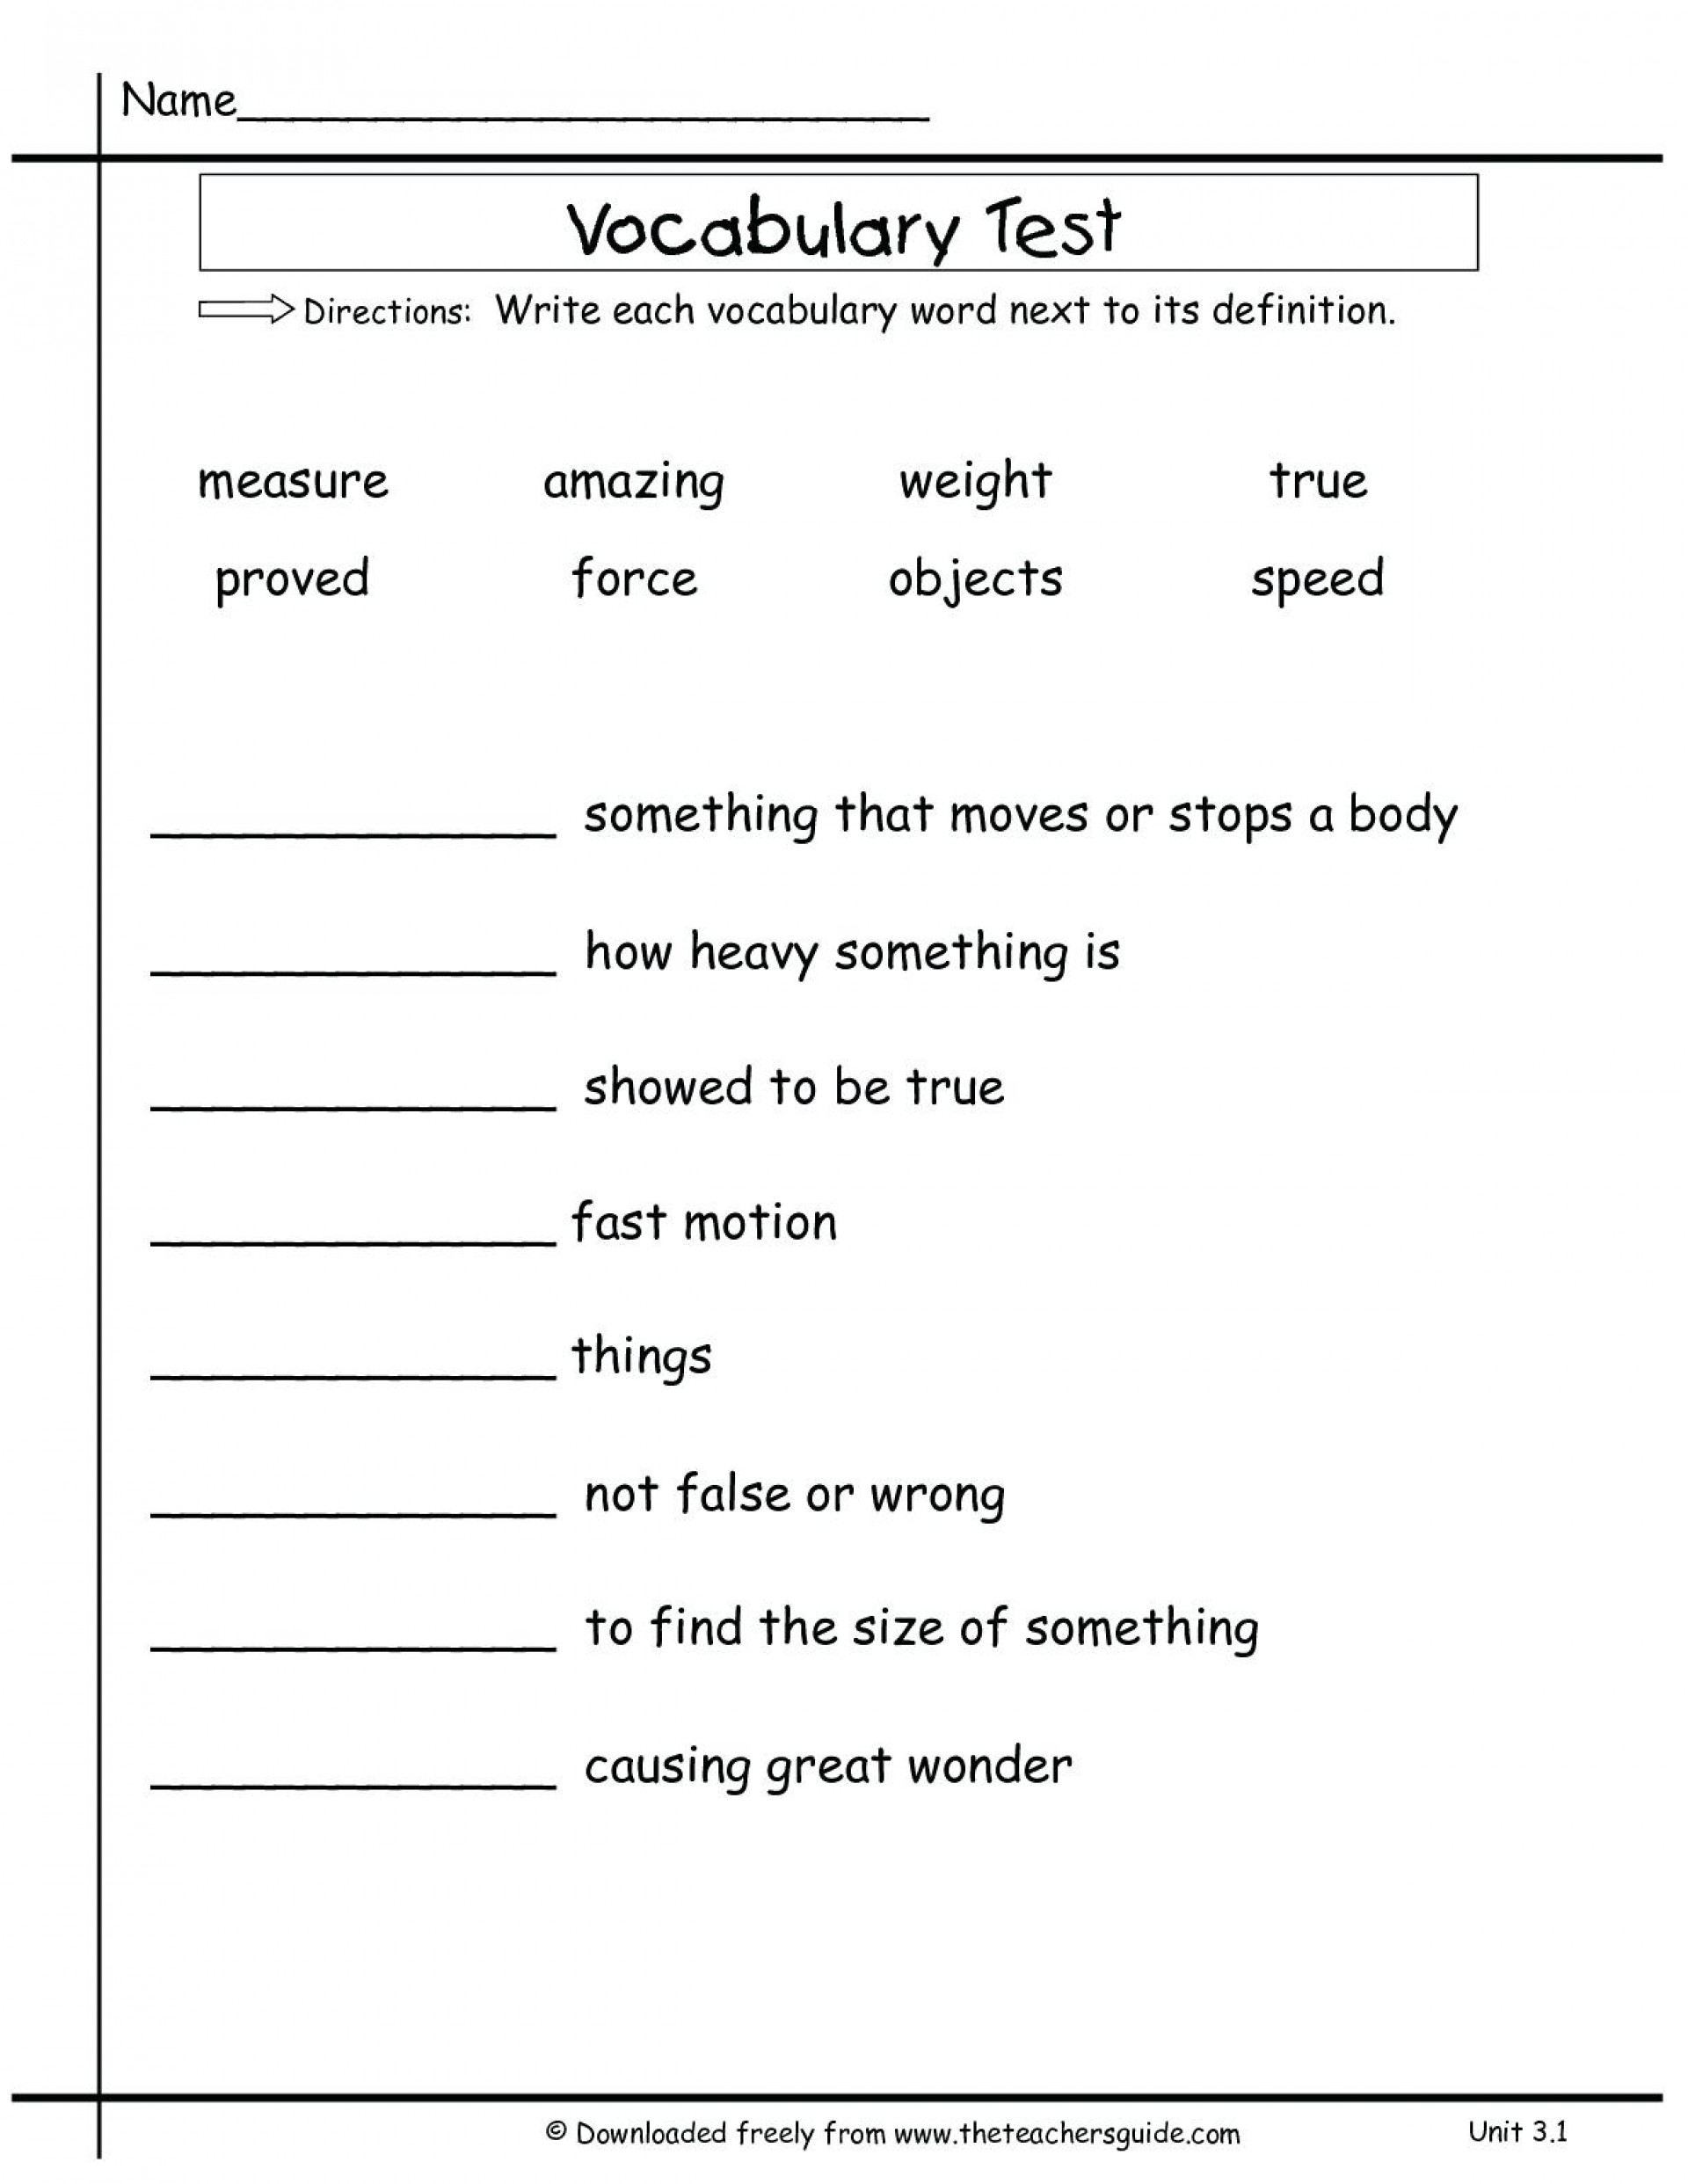 5th grade worksheet pdf